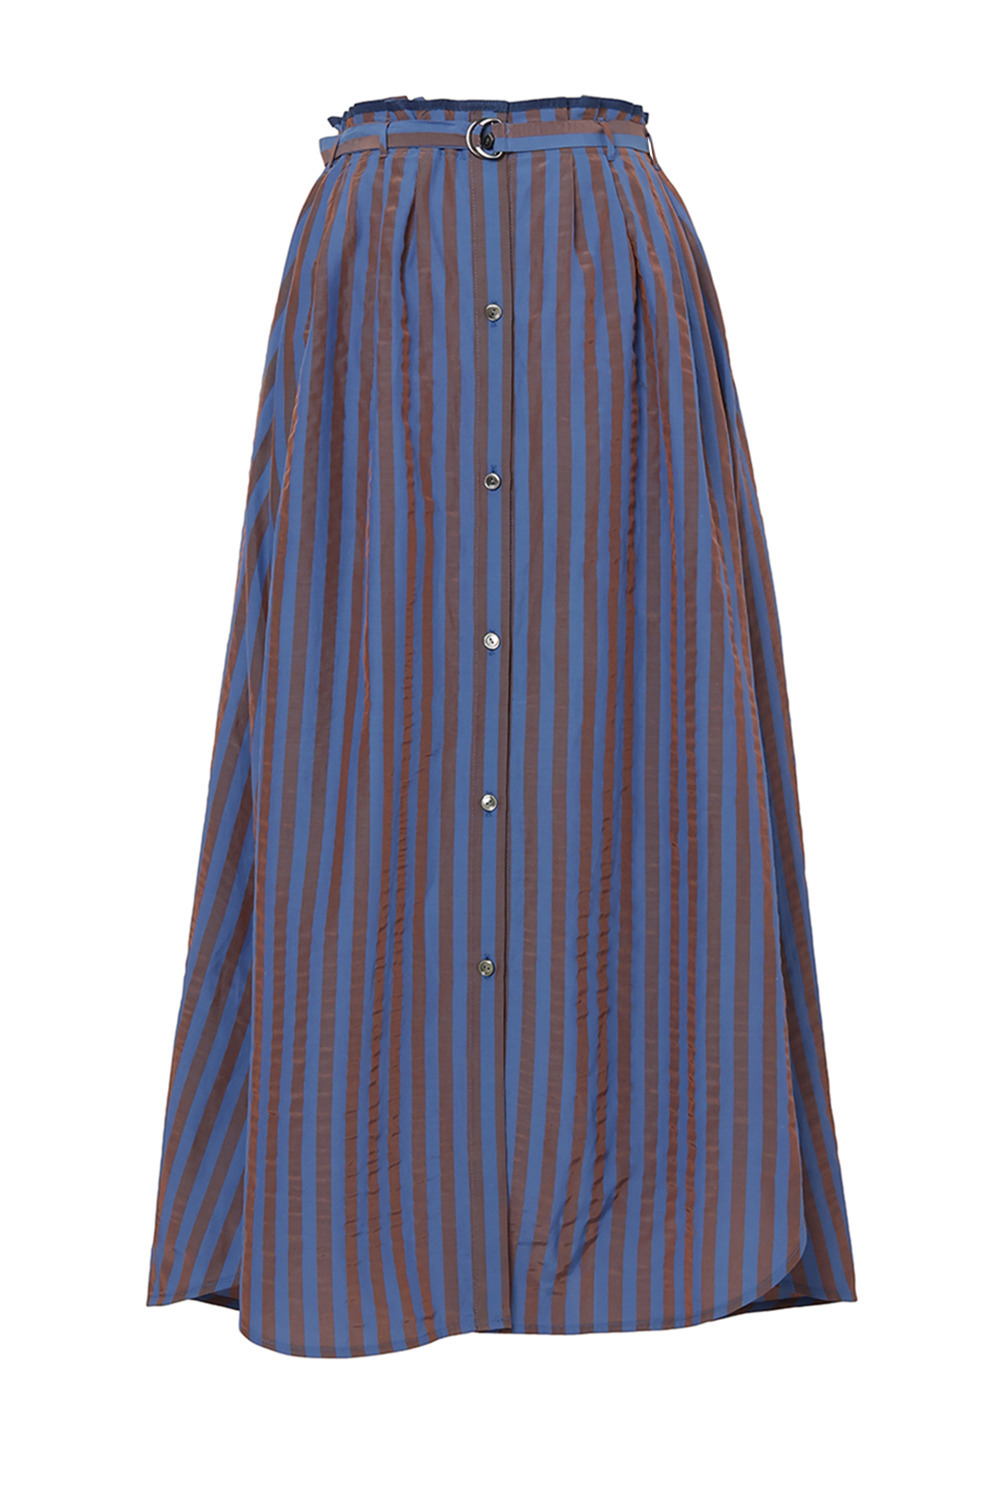 Stripe Shirt スカート 詳細画像 ブルー